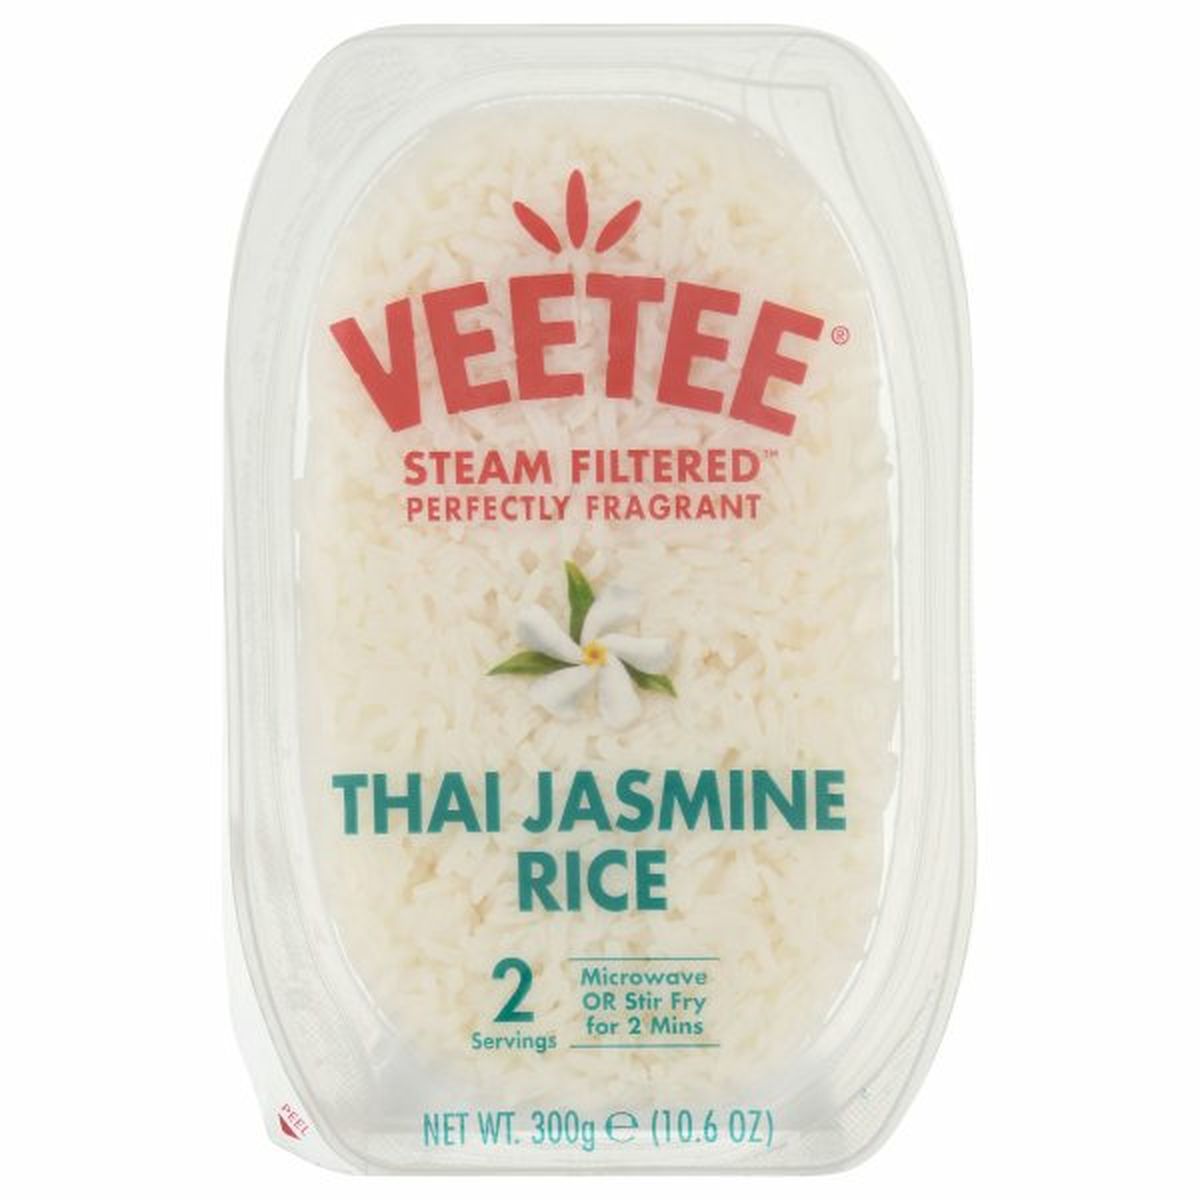 Calories in Veetee Steam Filtered Jasmine Rice, Thai